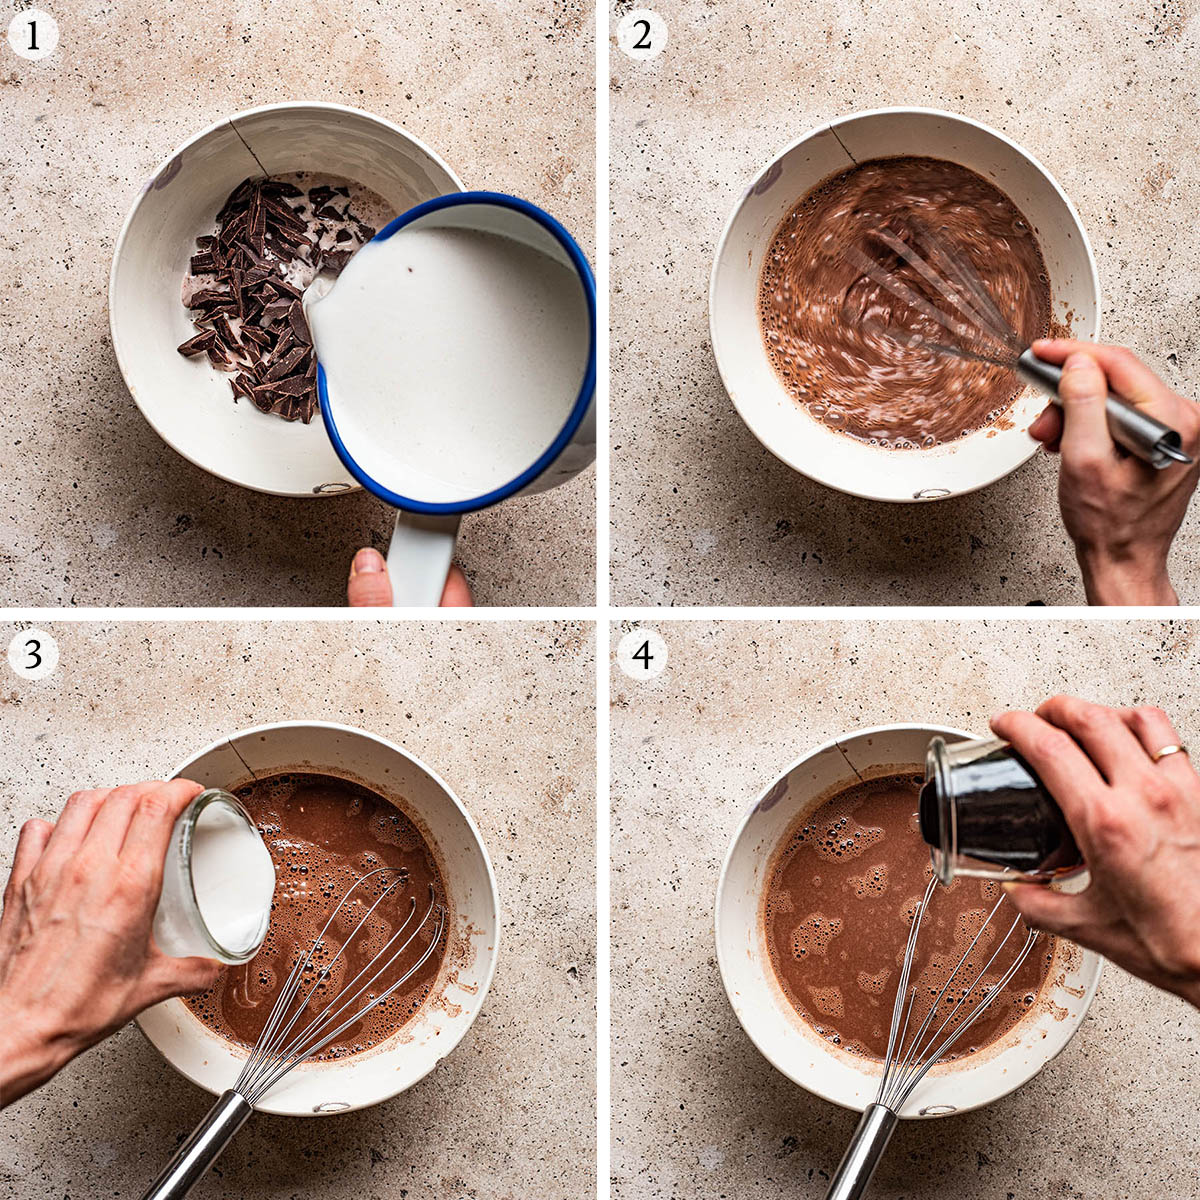 Chocolate coconut milk ice cream steps 1 to 4.